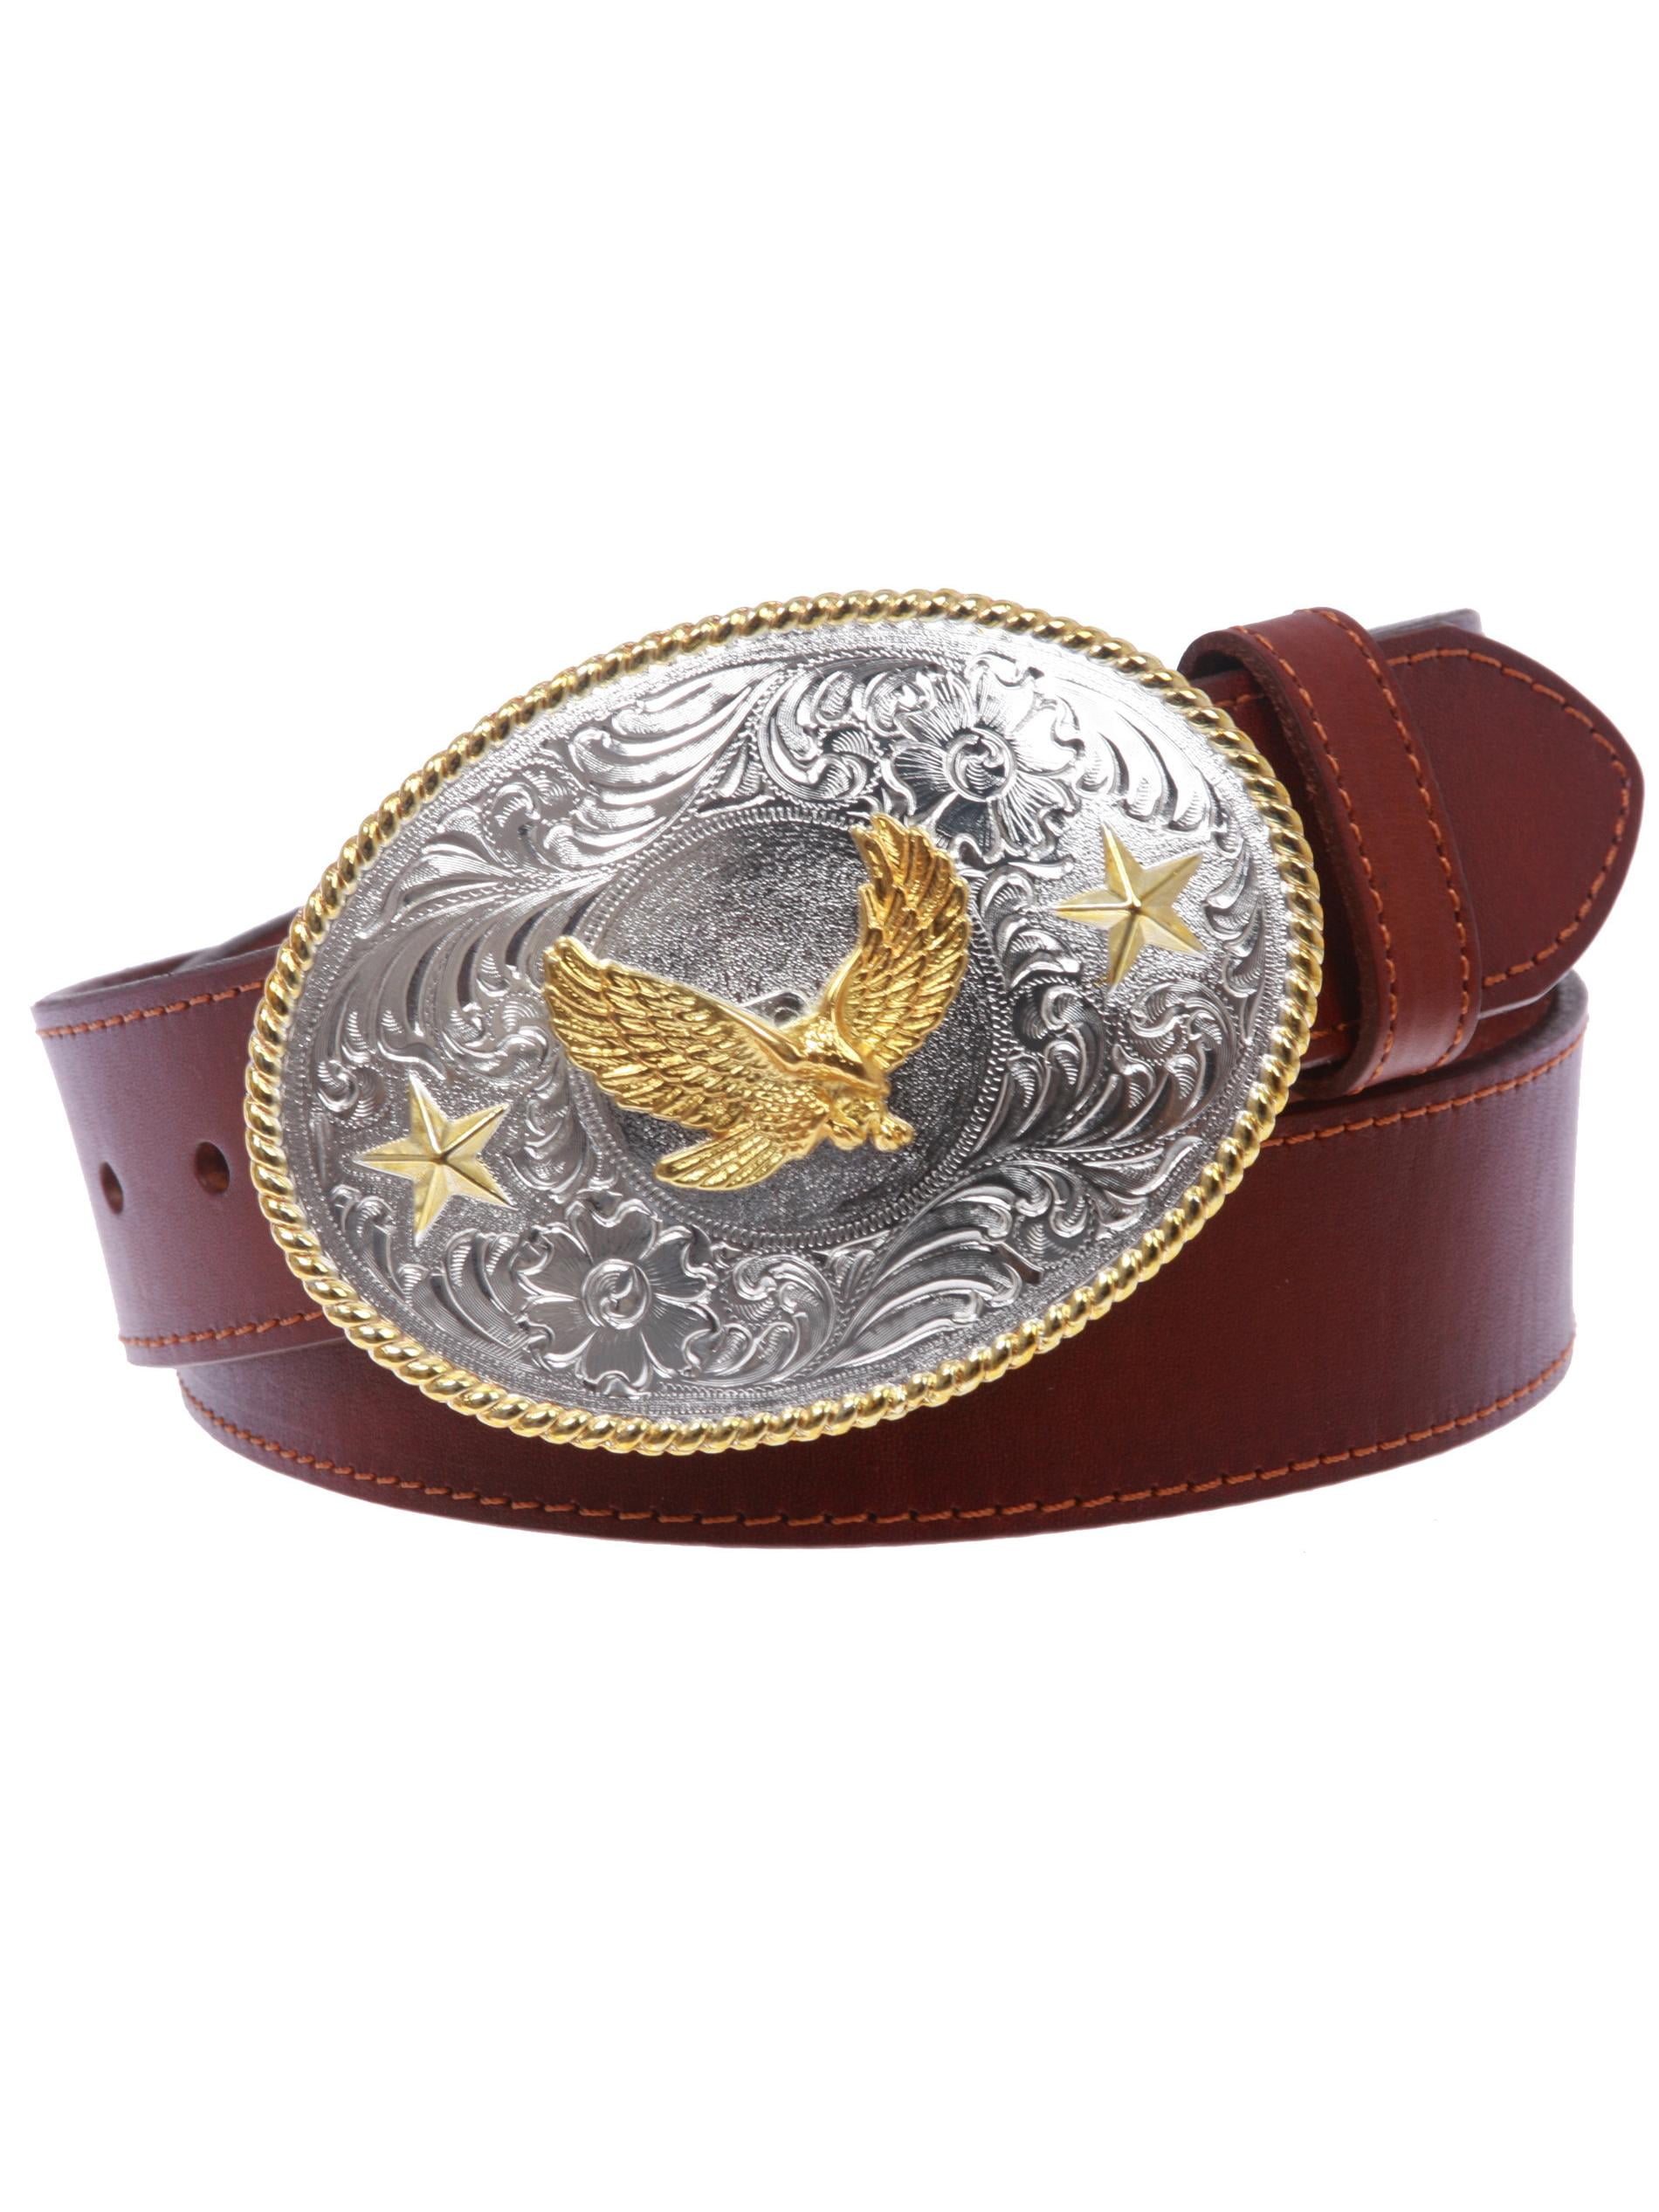 American Eagle Metal Belt Buckle Western Cowboy Silver Gold finish Patriotic